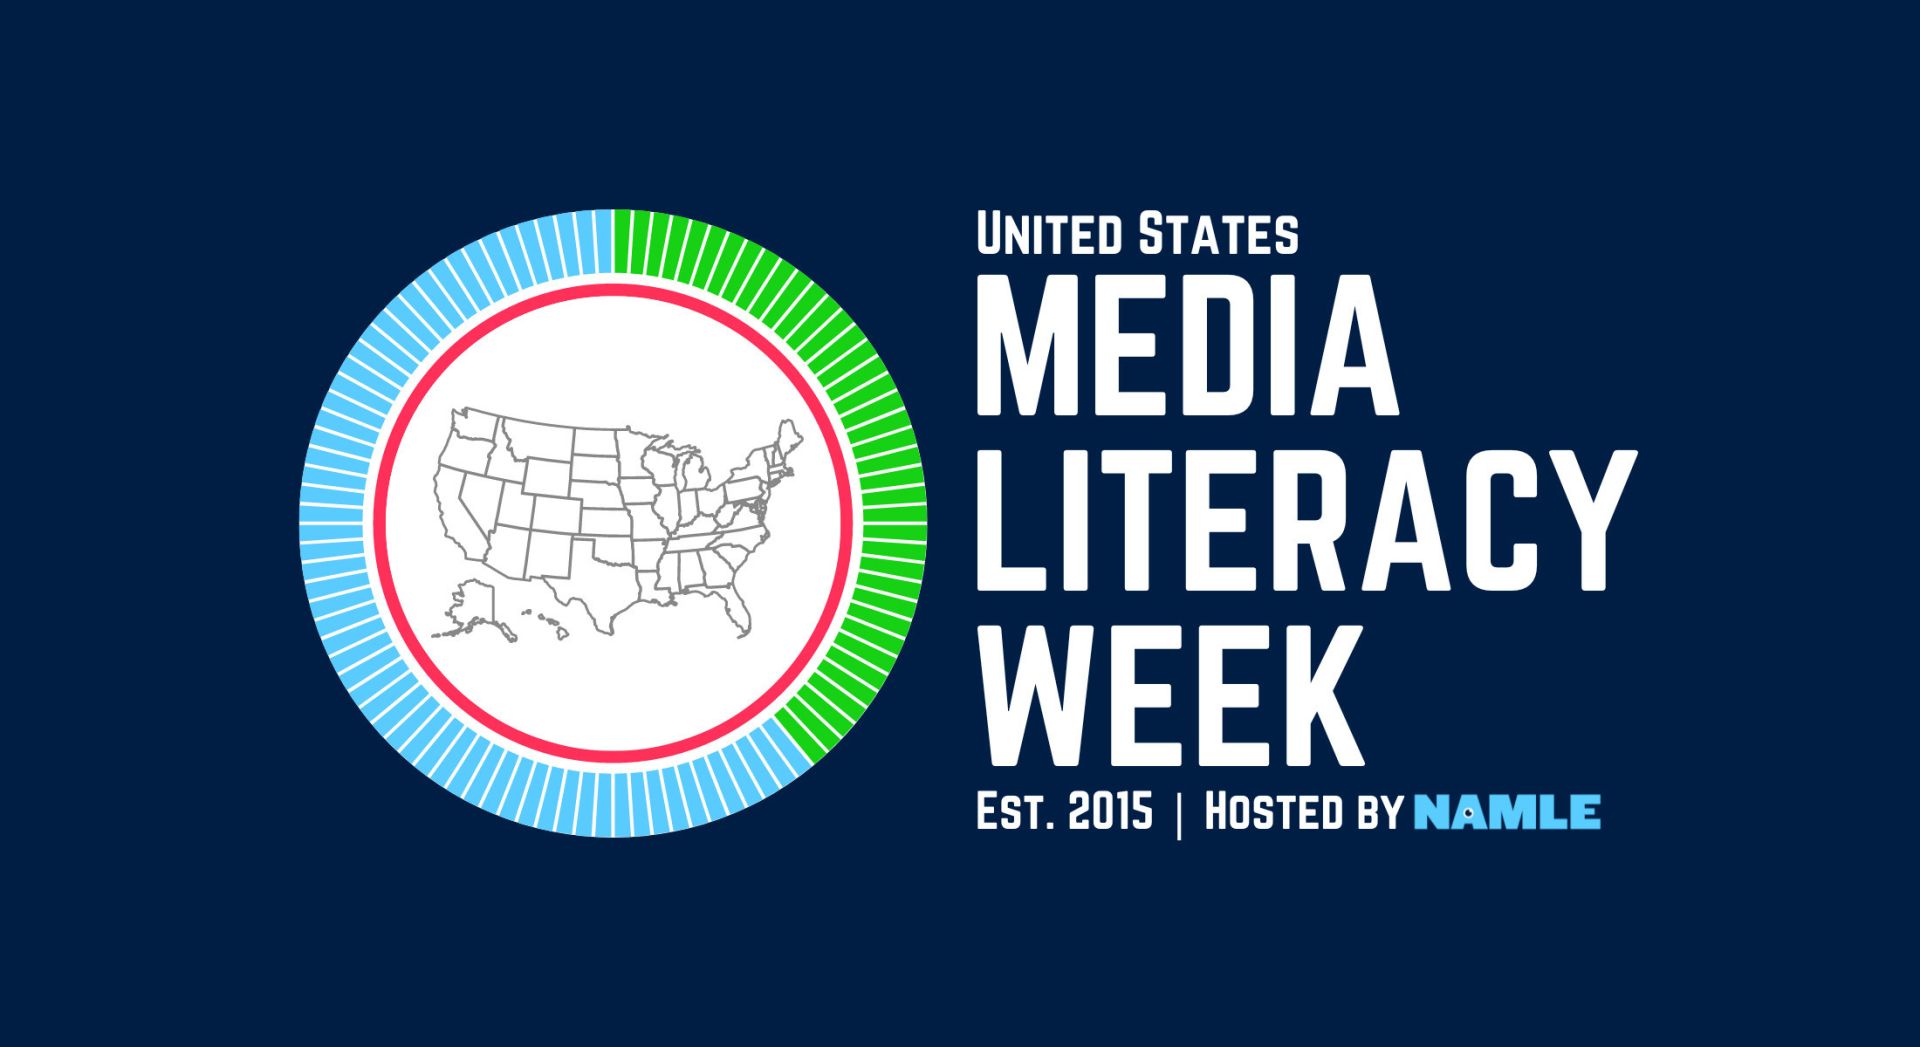 United States Media Literacy Week | NAMLE, Est. 2015